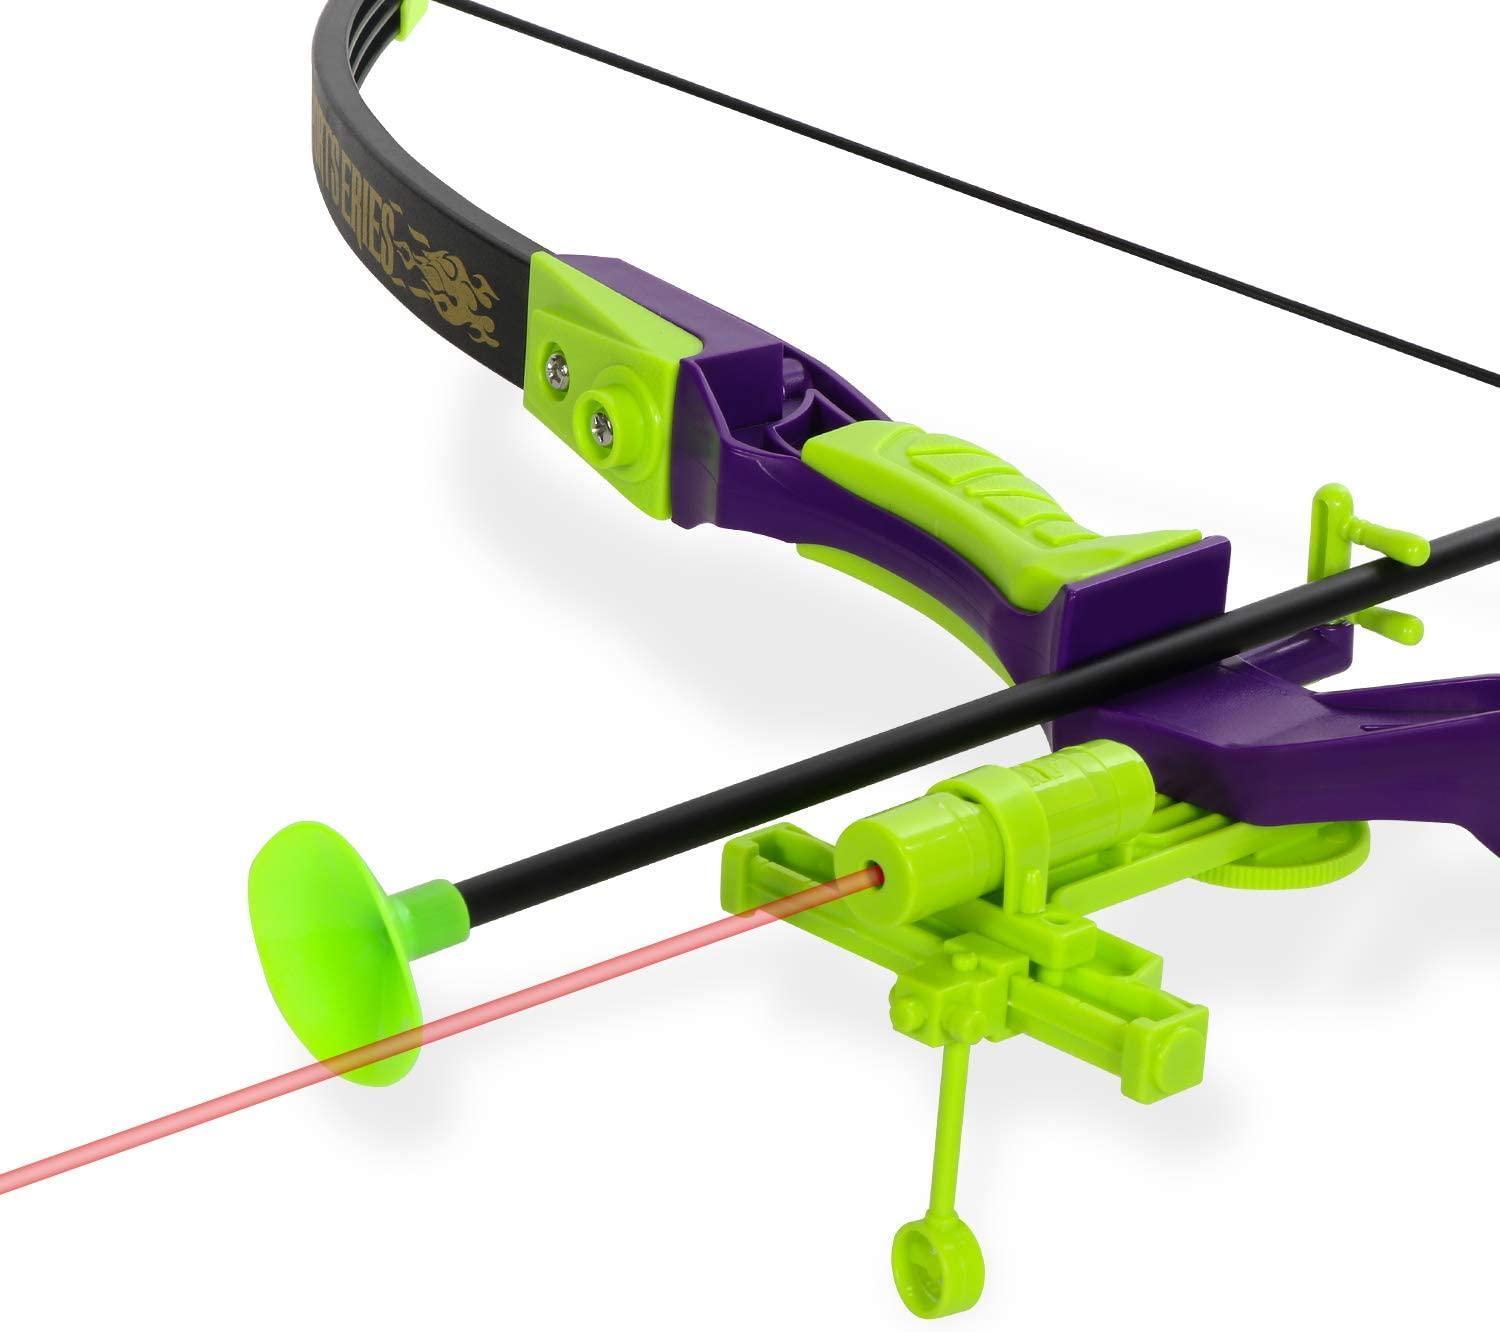 Sport Series Archery Shooting Set, Bow & Arrow Toy, Basic Archery